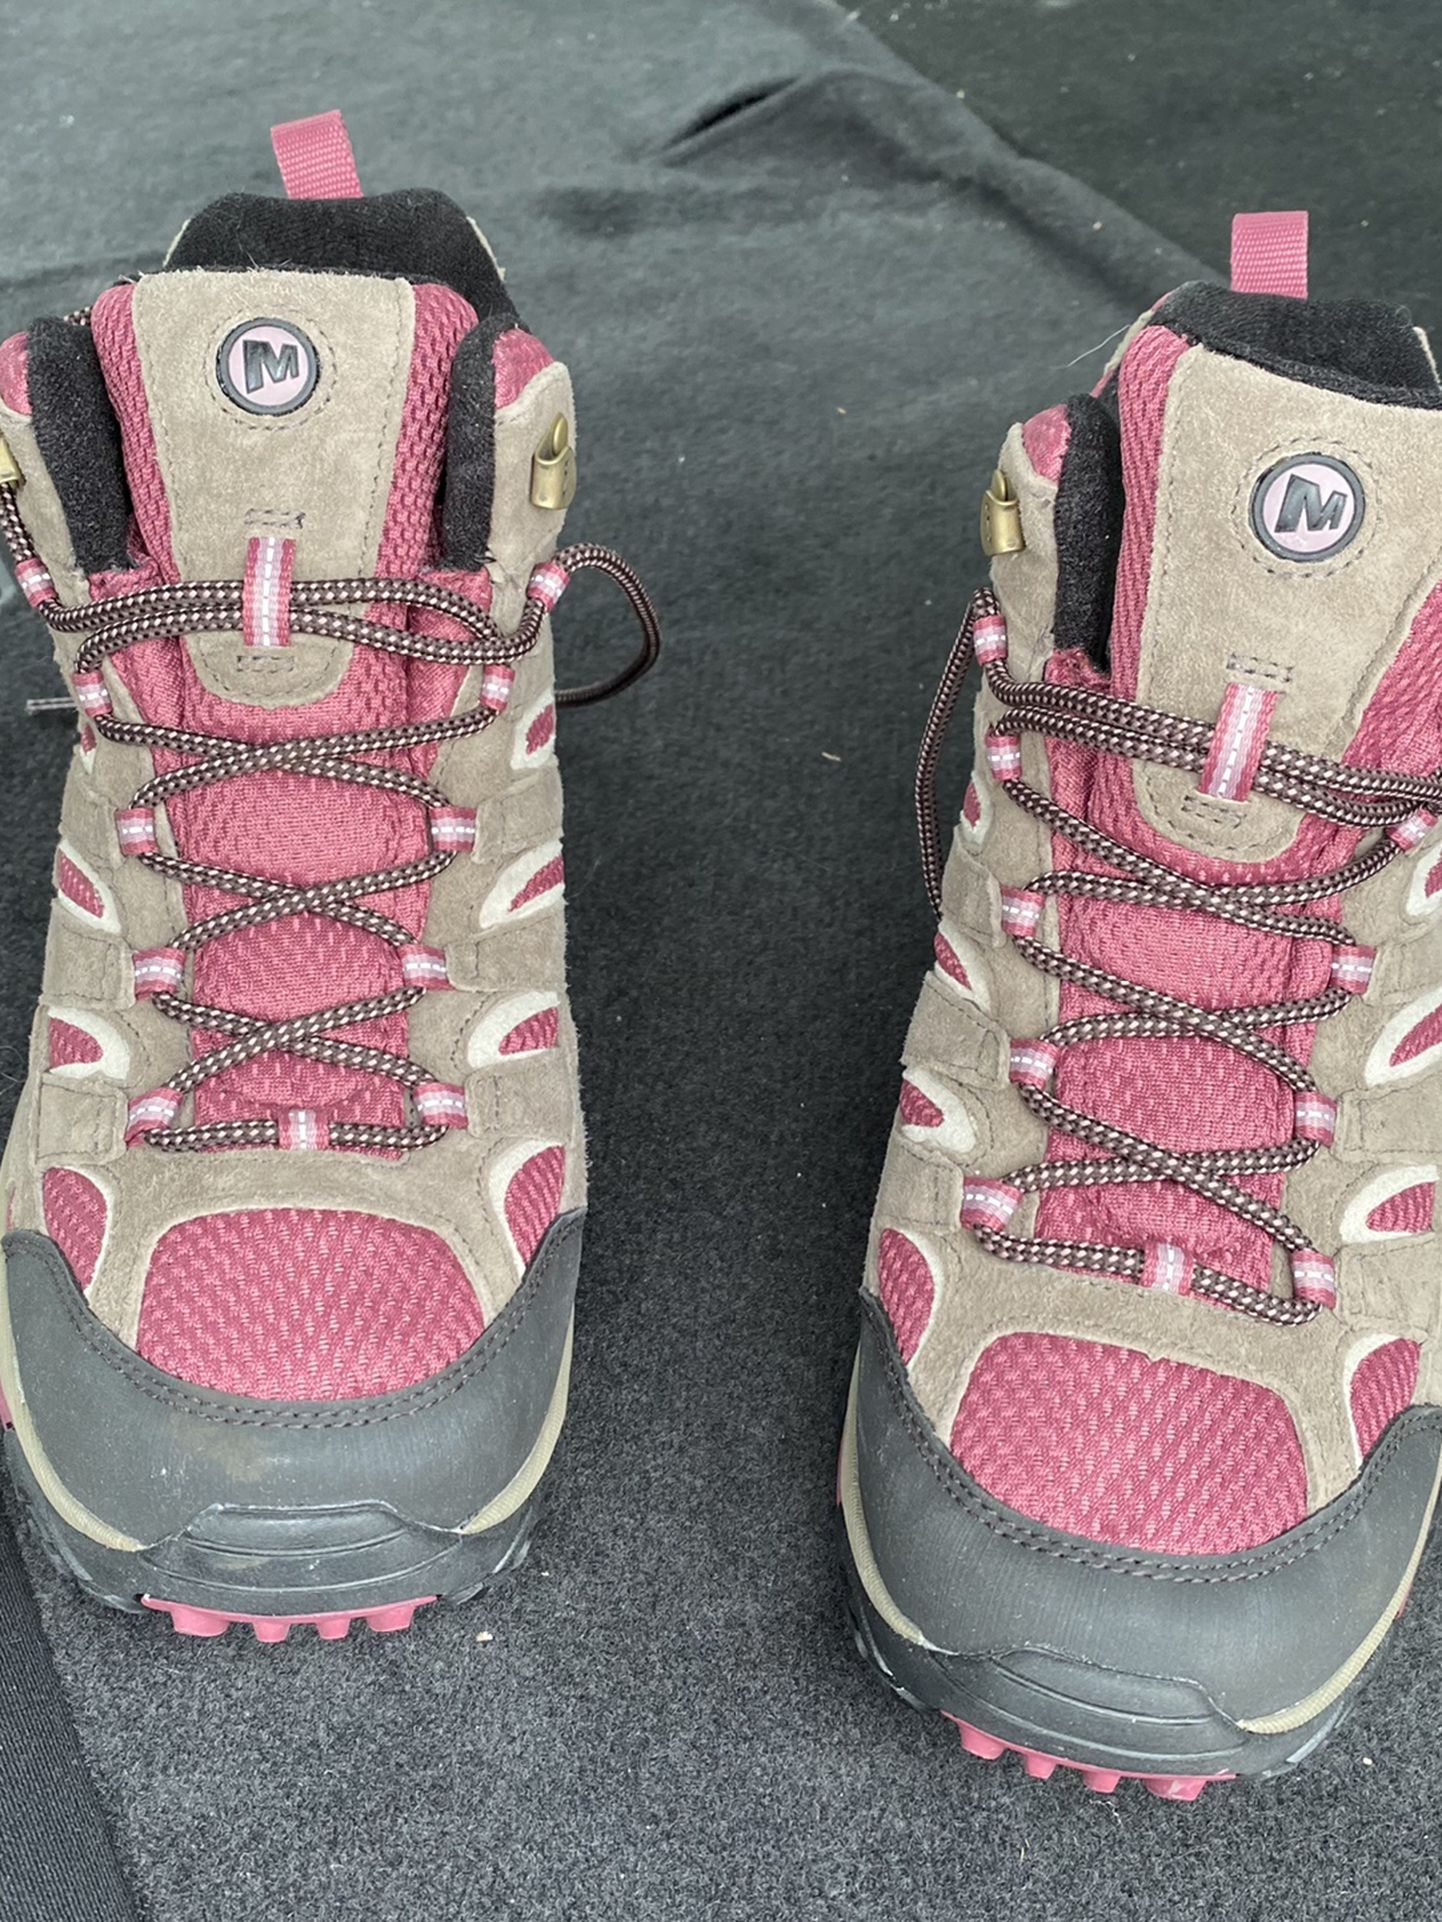 Vibram Merrel Women’s Hiking Boots Size 11